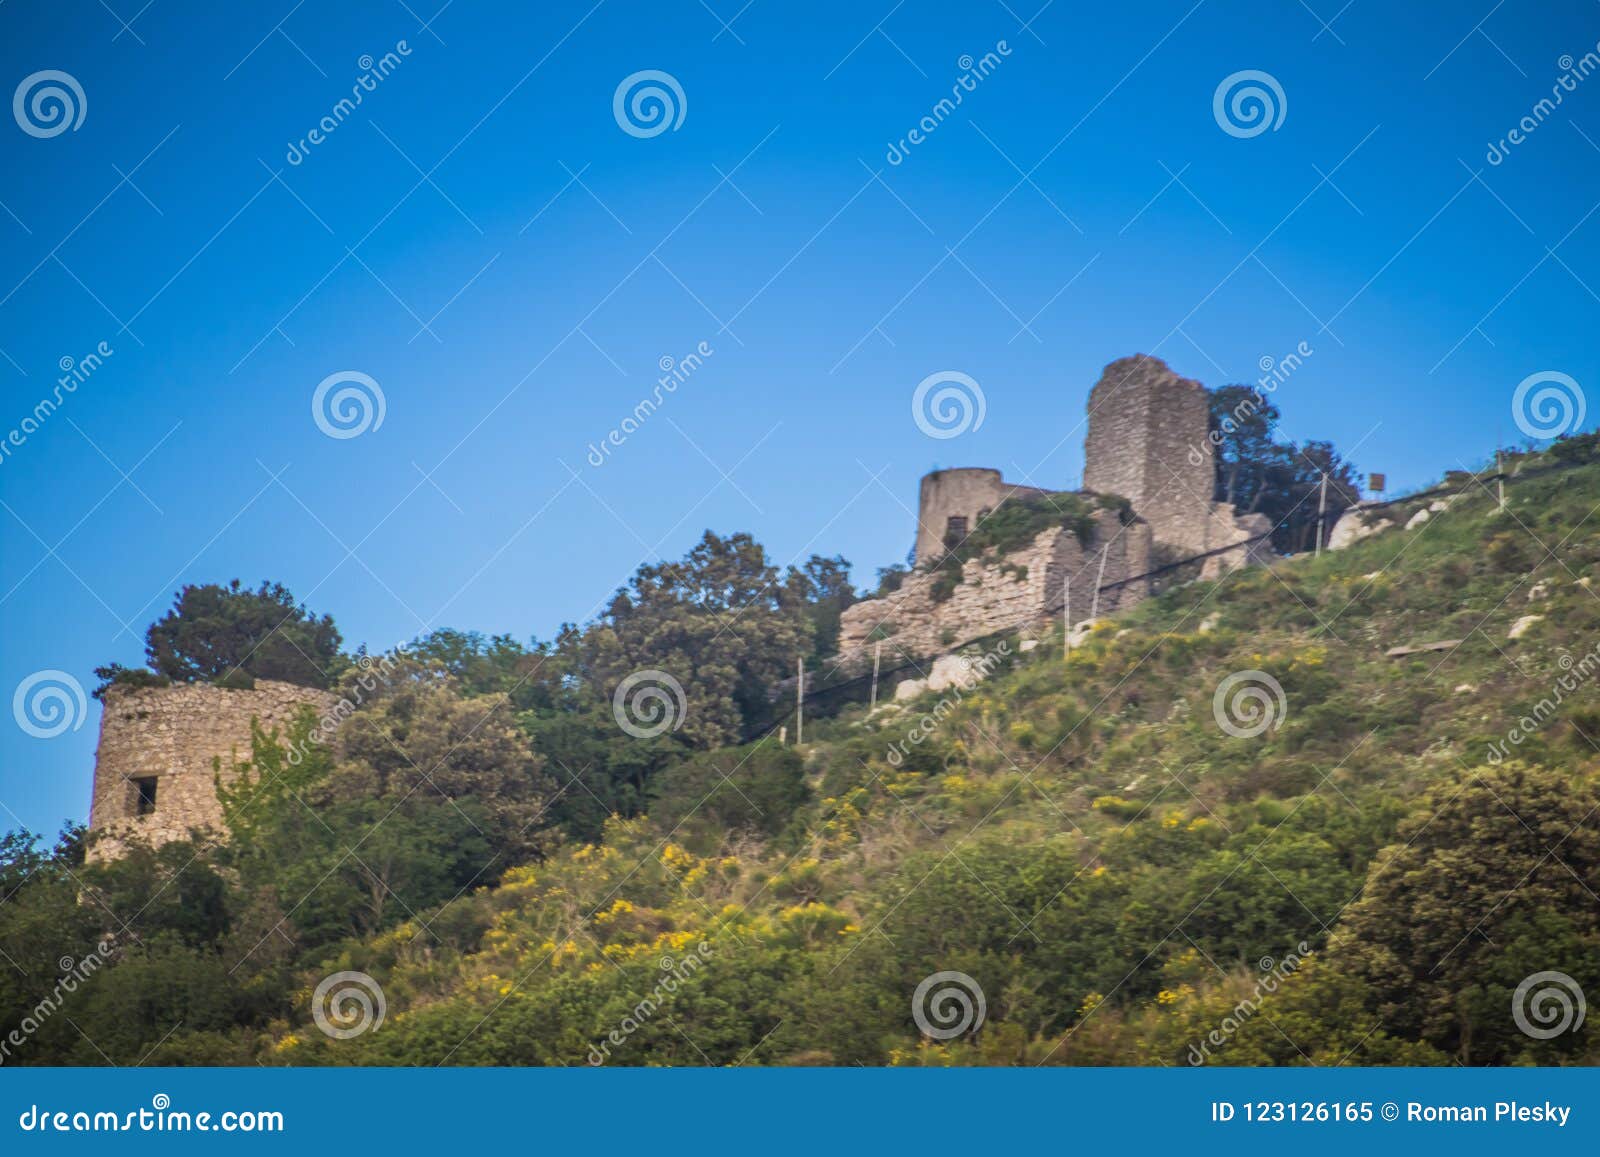 castello barbarossa on the island of capri, italy